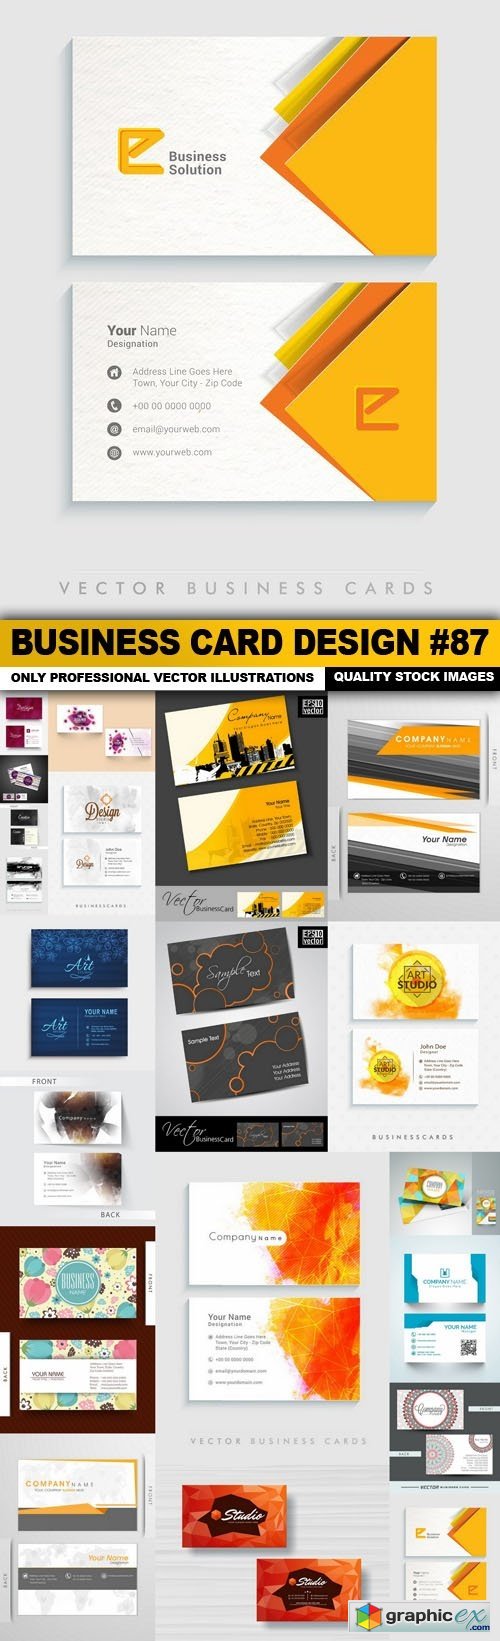 Business Card Design #87